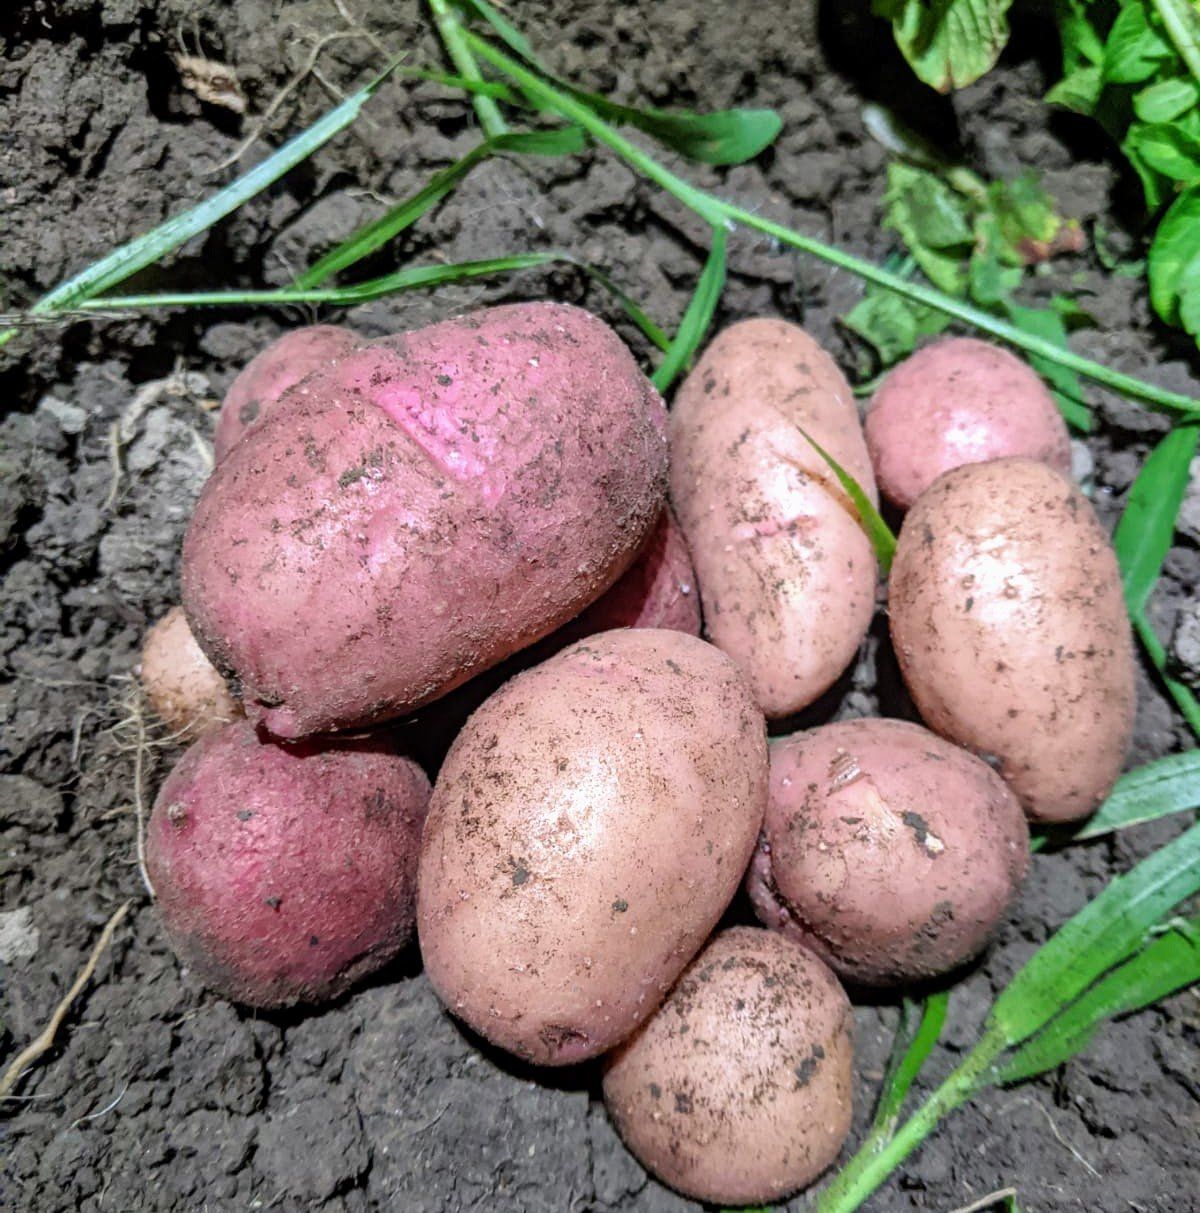 Farm Share Week 13 - Potatoes!